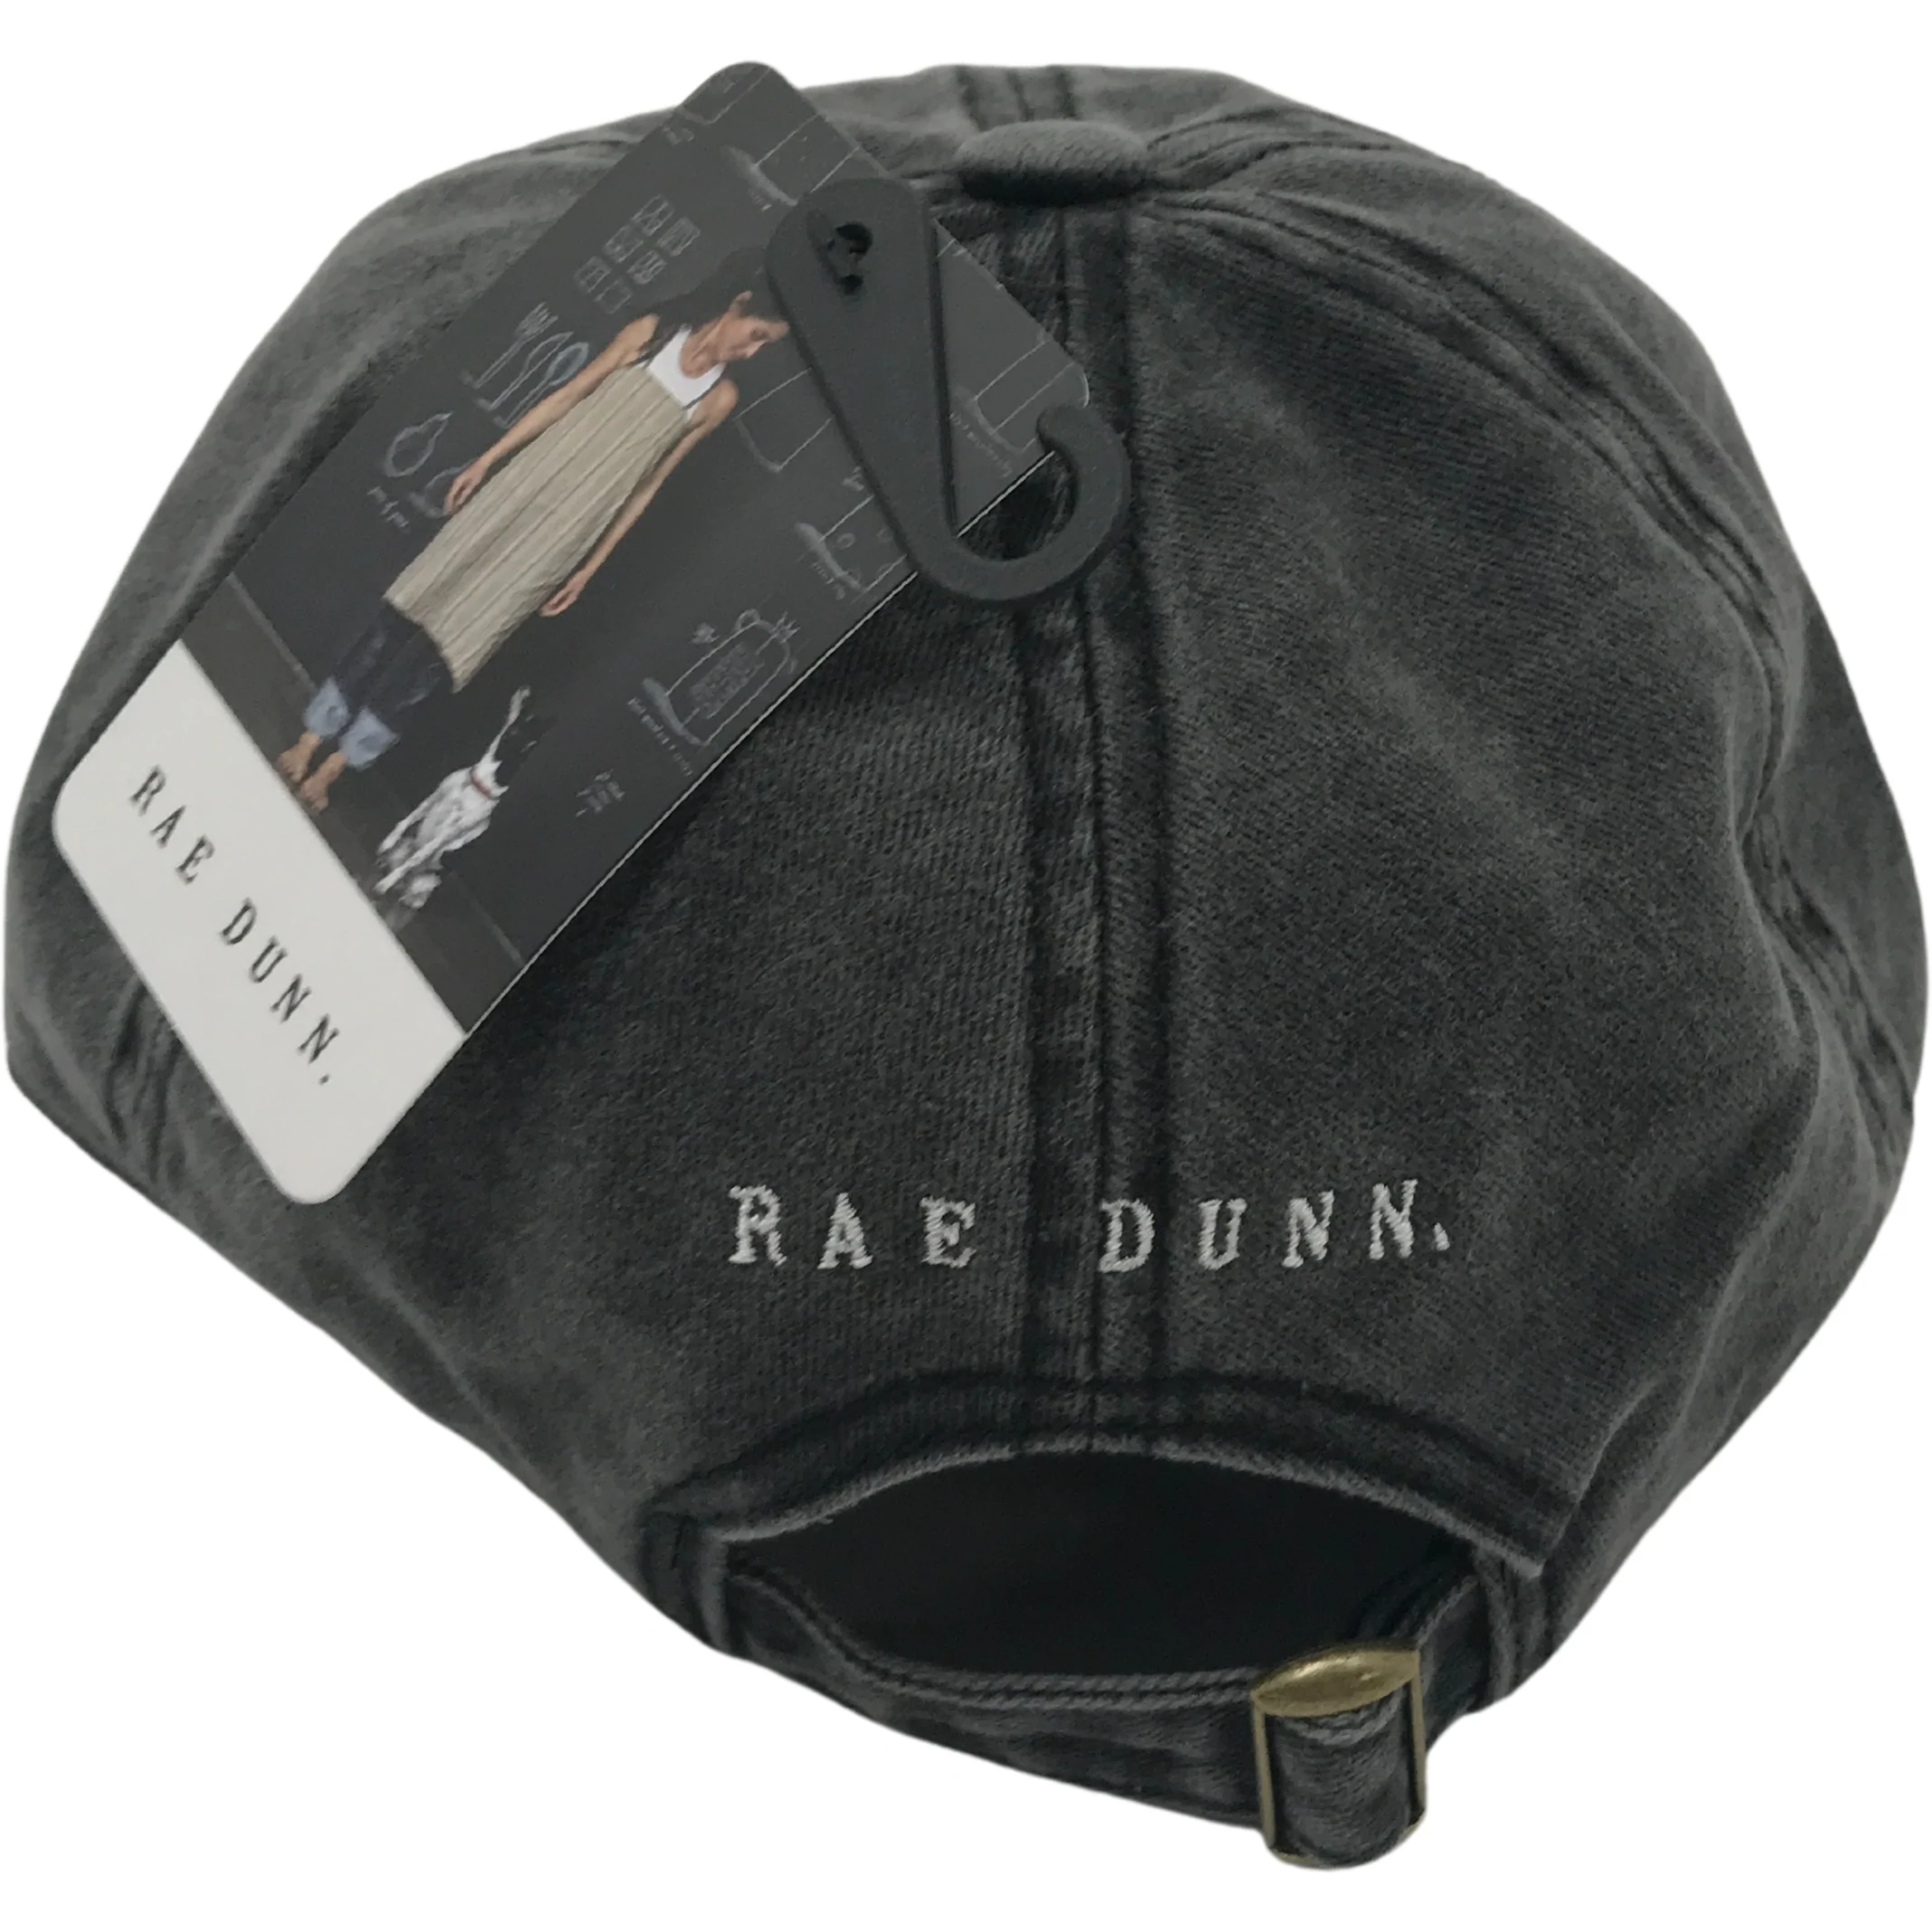 Rae Dunn Adult Baseball Cap / Adult Baseball Hat / "BAD HAIR DAY" / Black